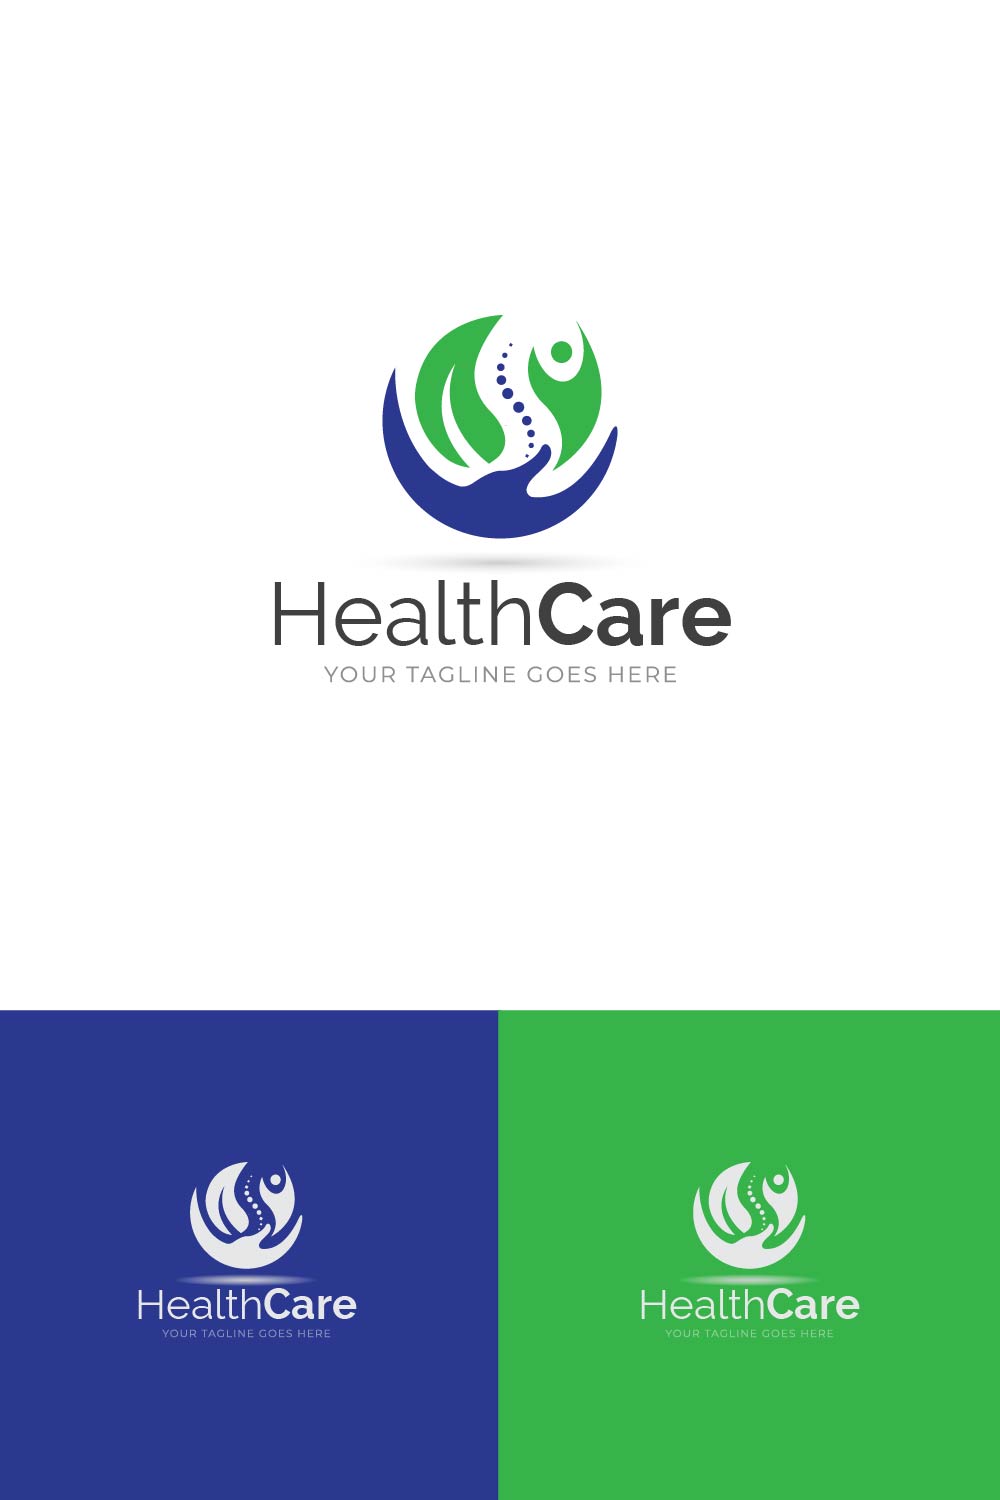 Health care logo design pinterest preview image.